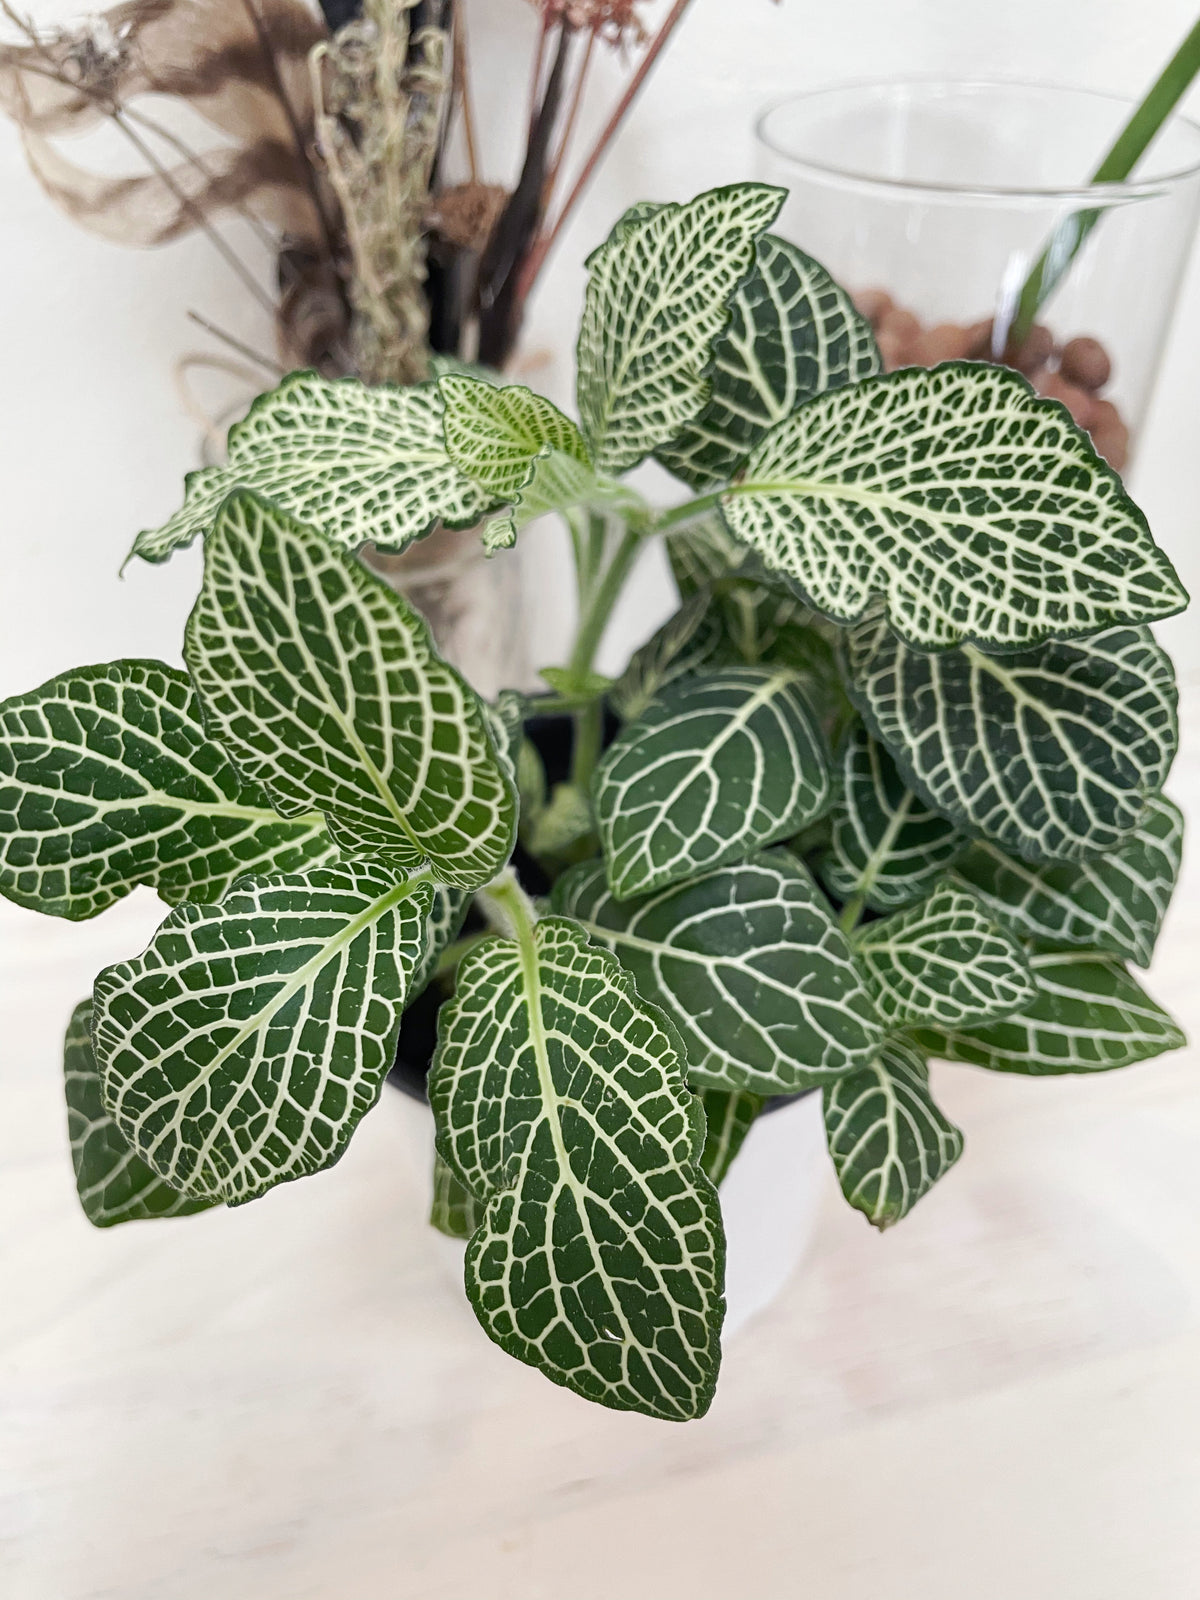 Fittonia “Nerve plant”